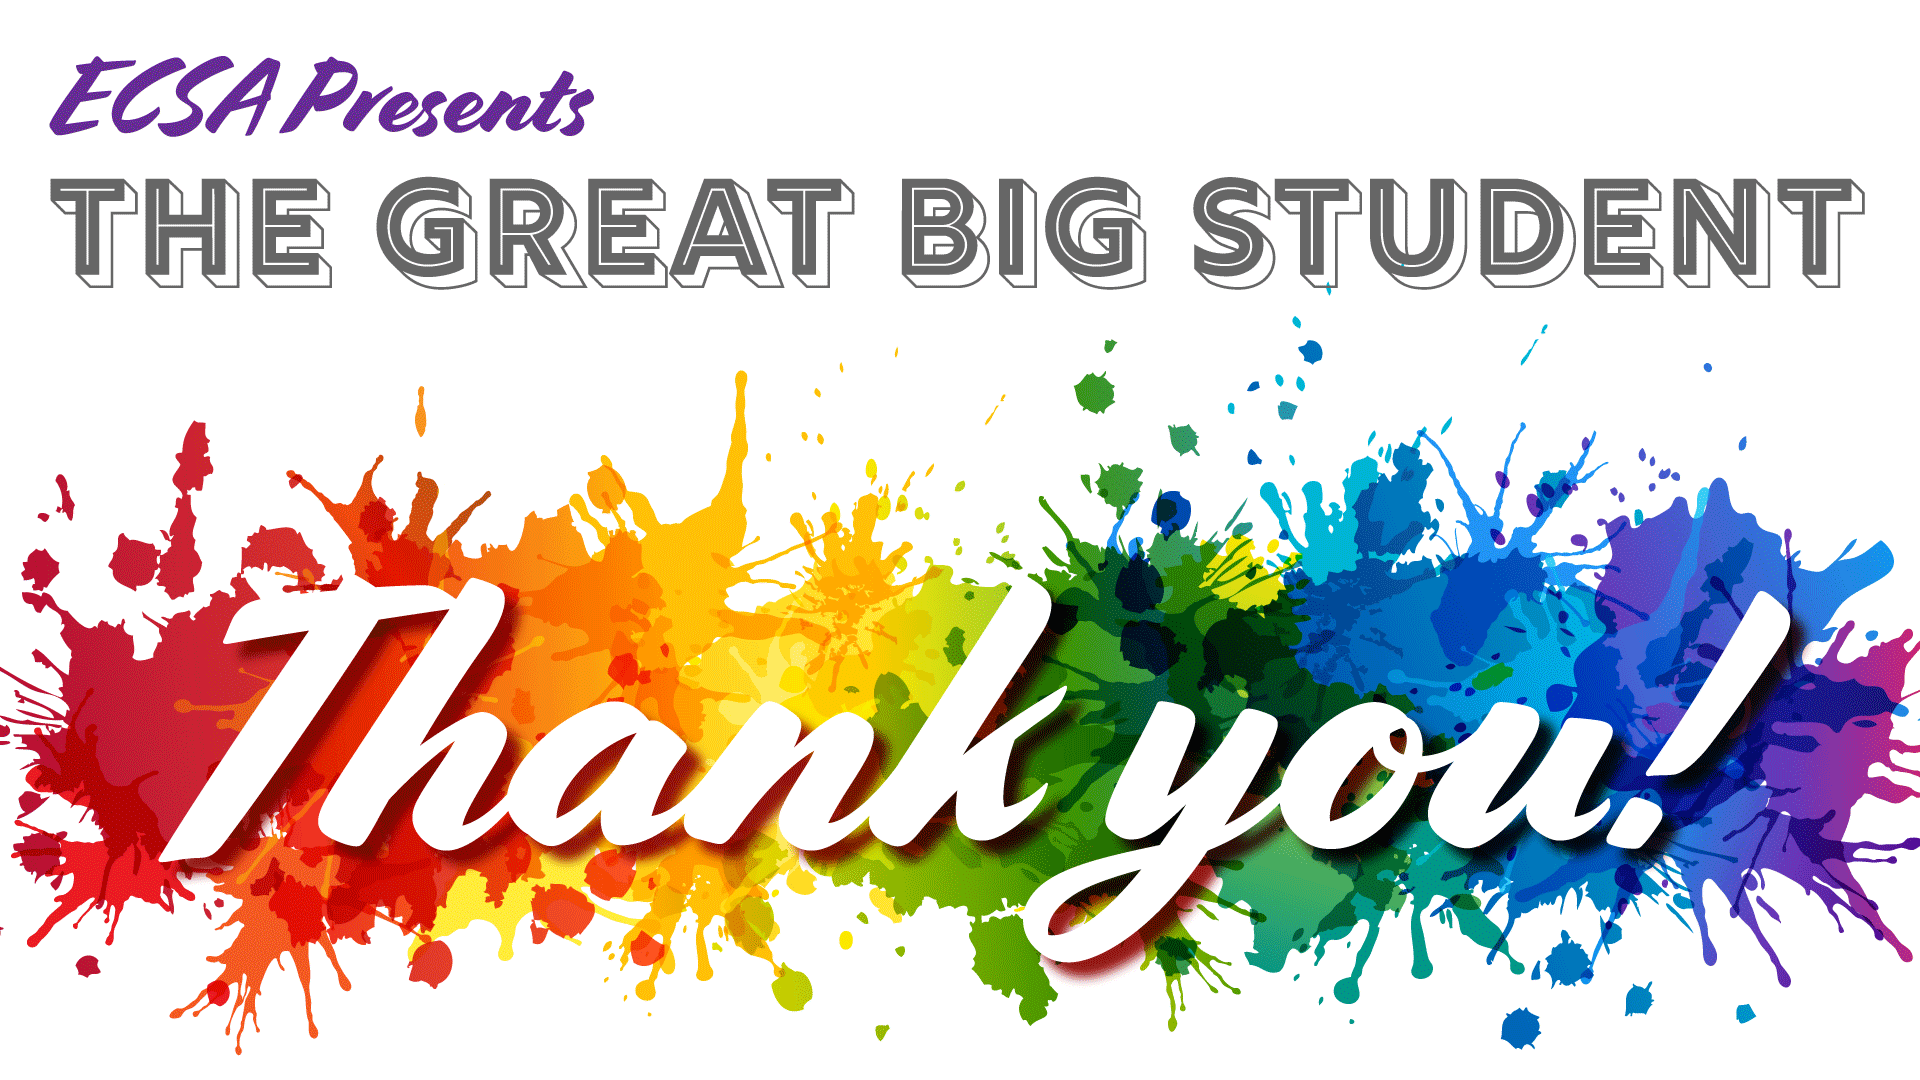 The Great Big Student Thank You | Edinburgh College Students' Association